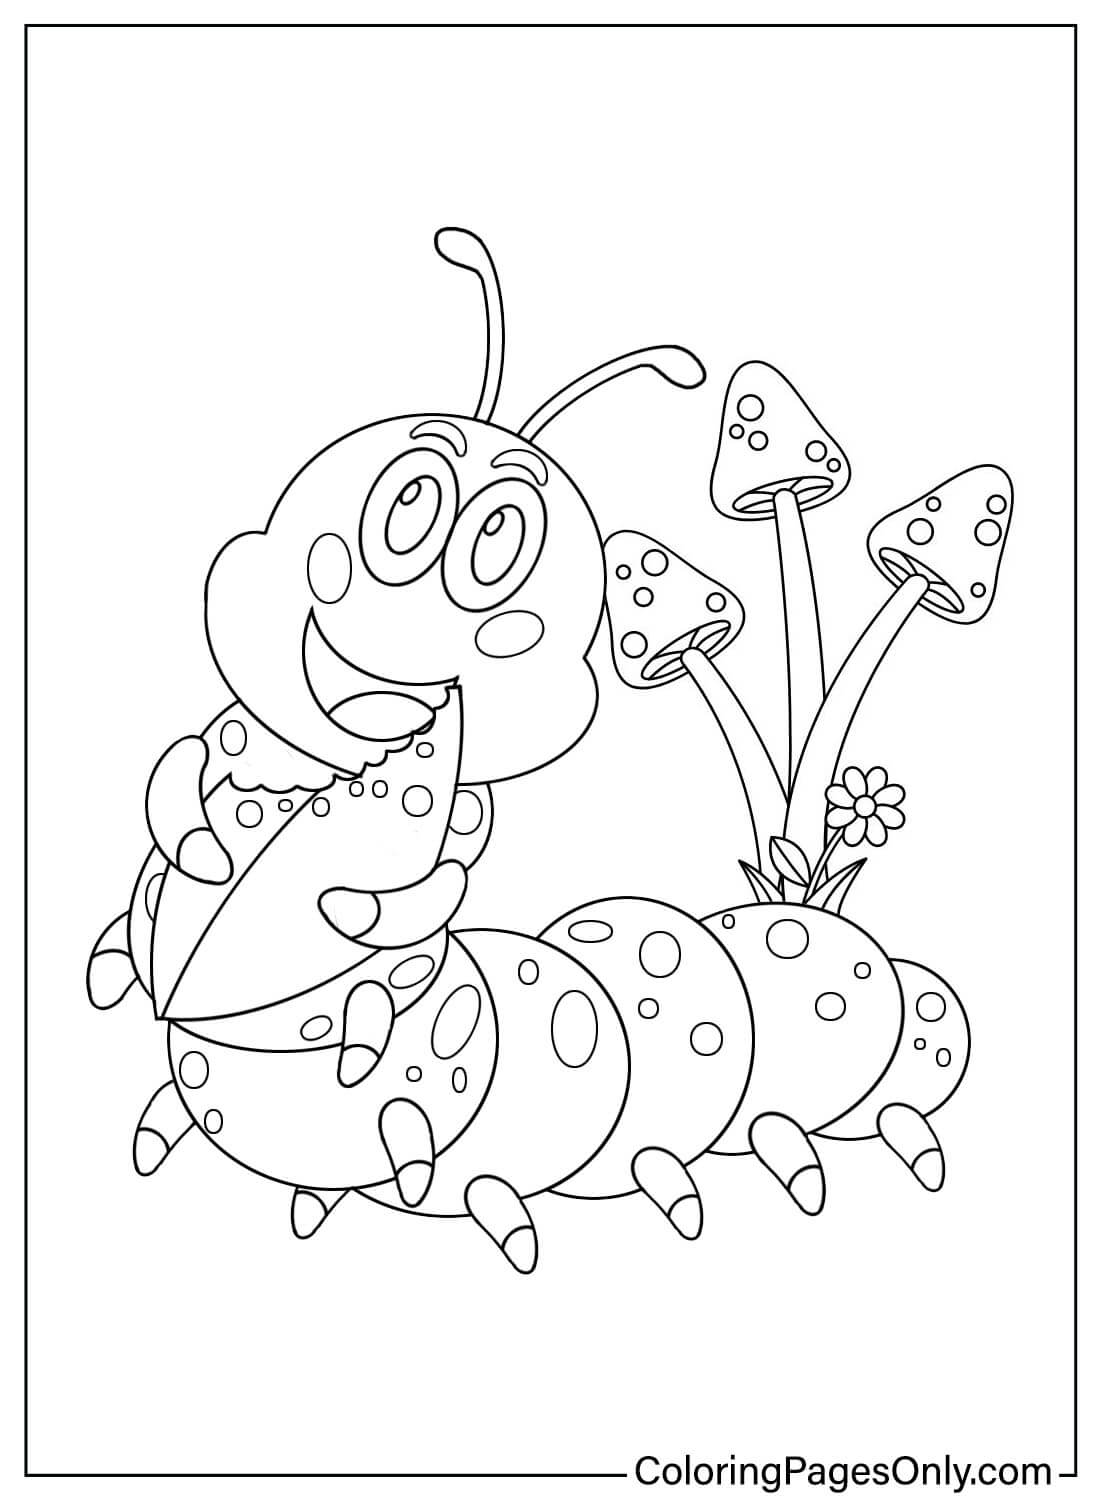 Página para colorear de Caterpillar para niños de Caterpillar